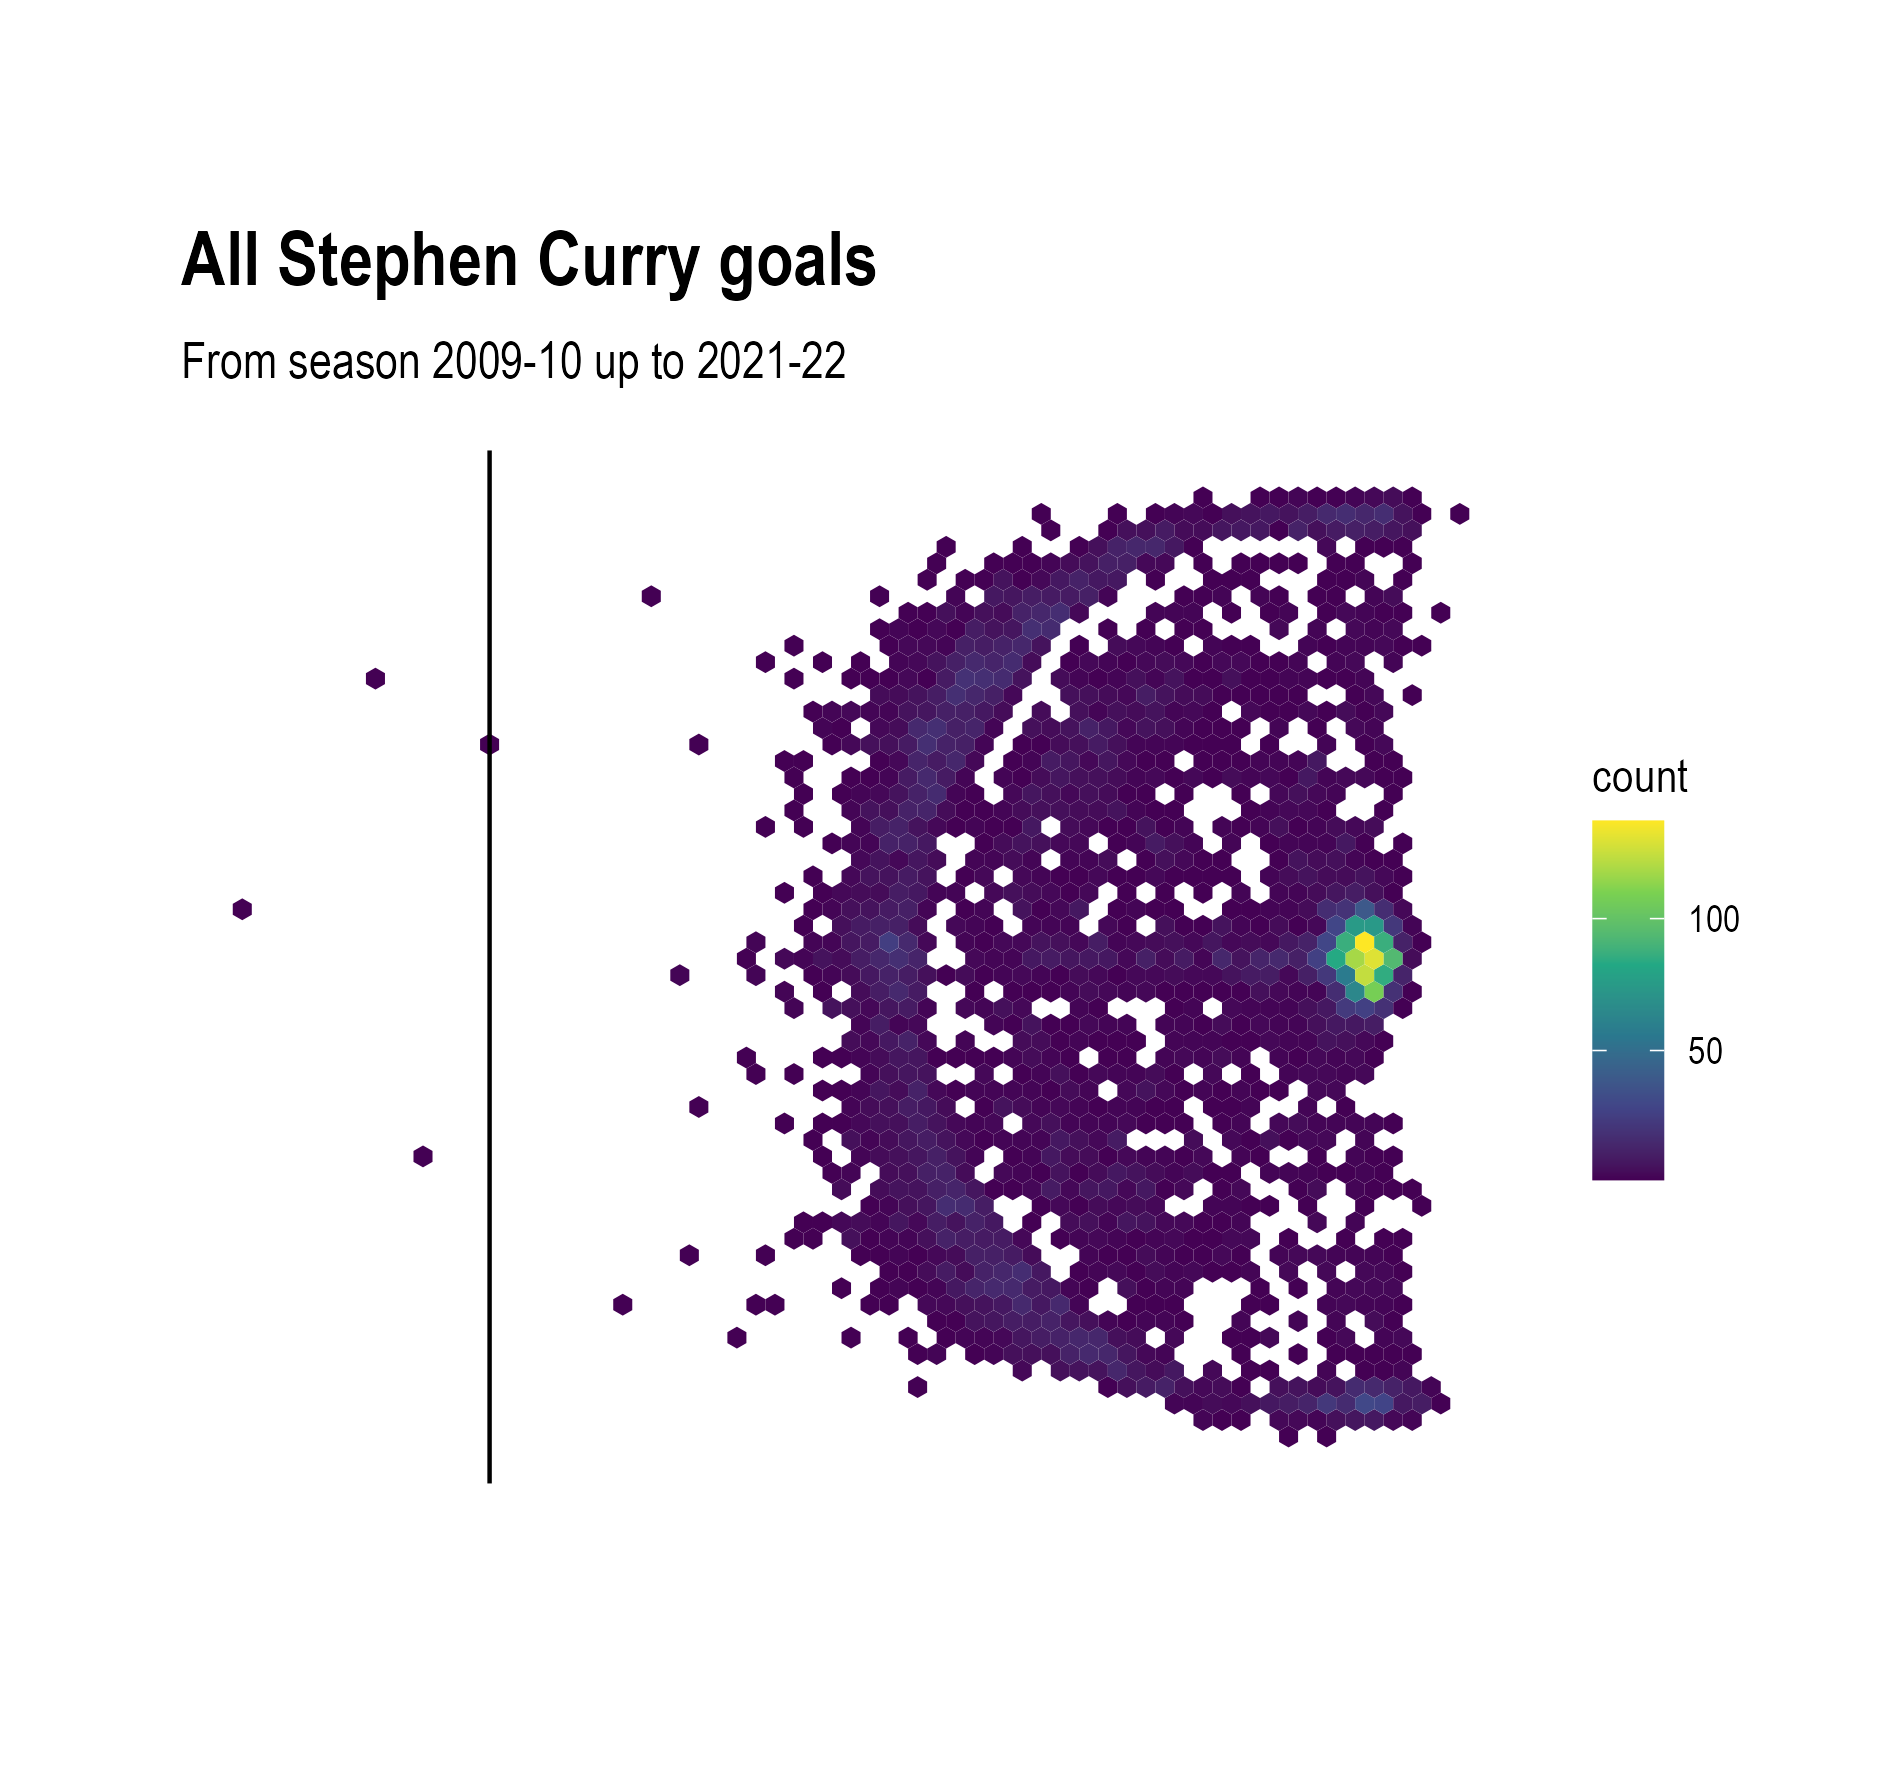 A binned scatterplot of the same data, with hexagonal bins